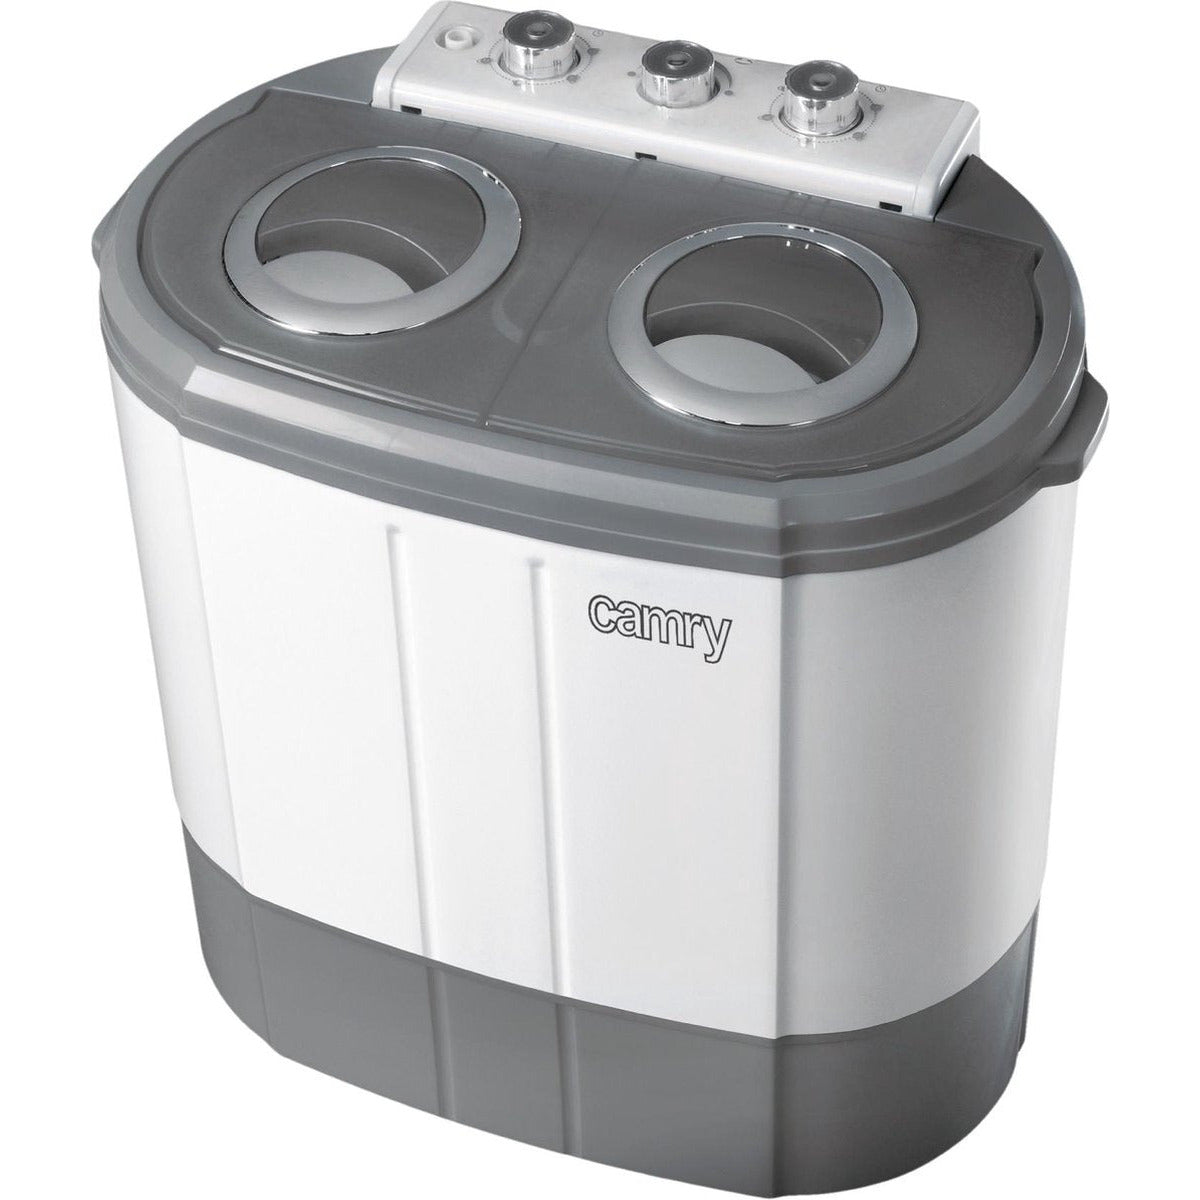 Nevelig Viskeus ongeduldig Camry camping mini wasmachine met centrifuge tot 3kg – Voordeelstore.nl